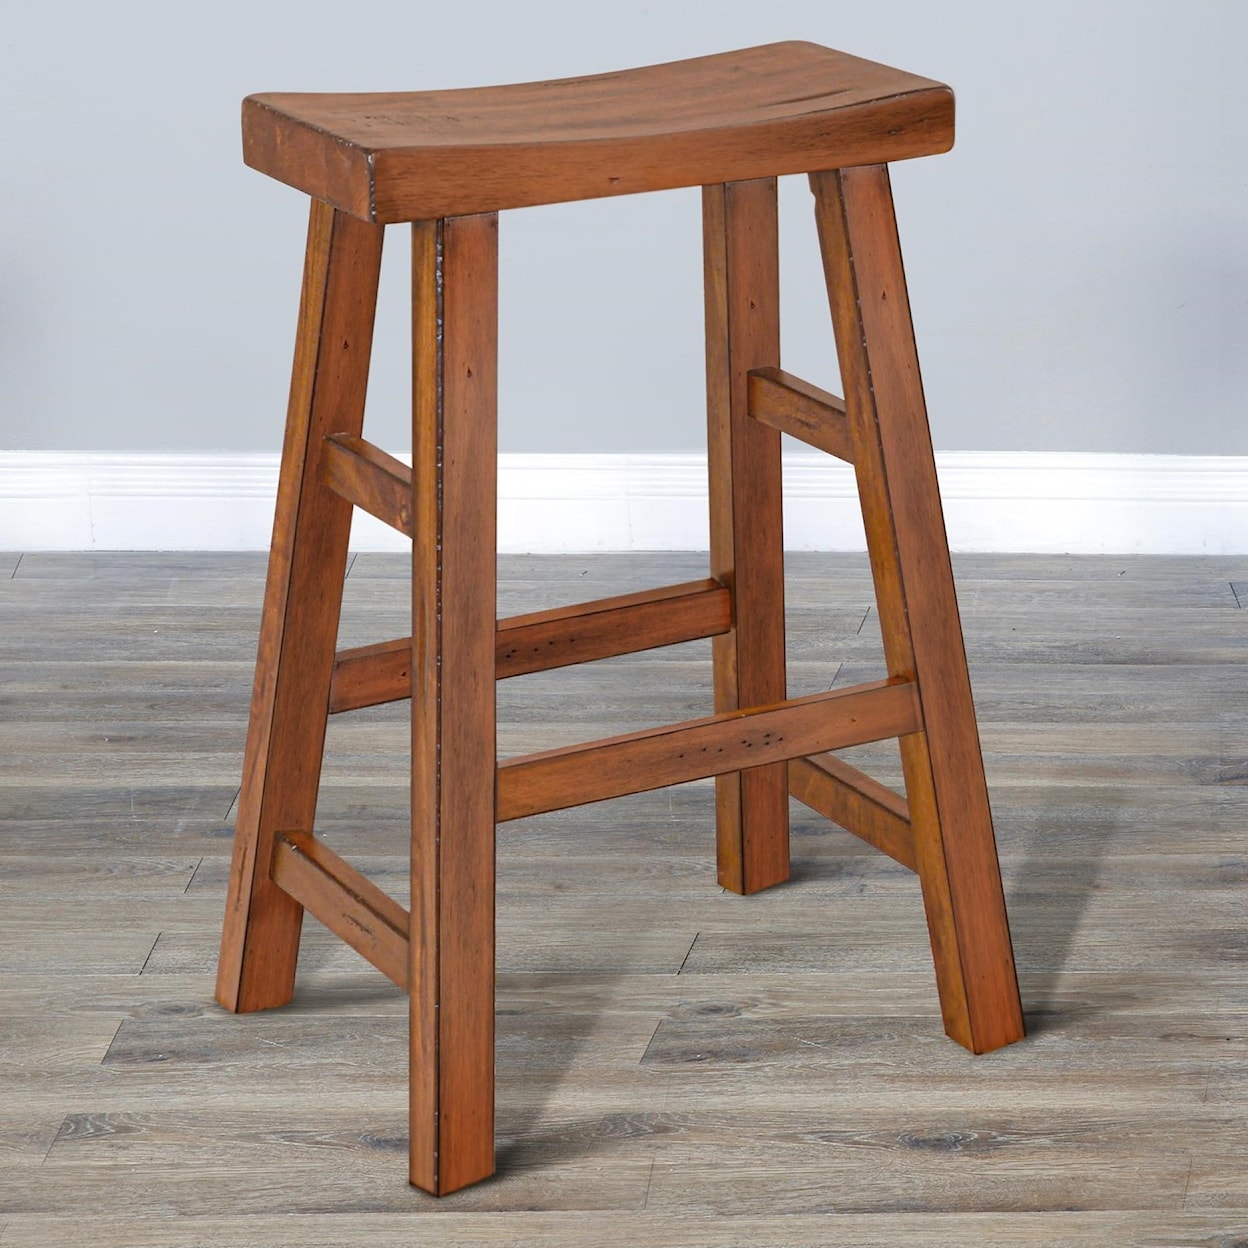 Sunny Designs 1768 30"H Saddle Seat Stool, Wood Seat